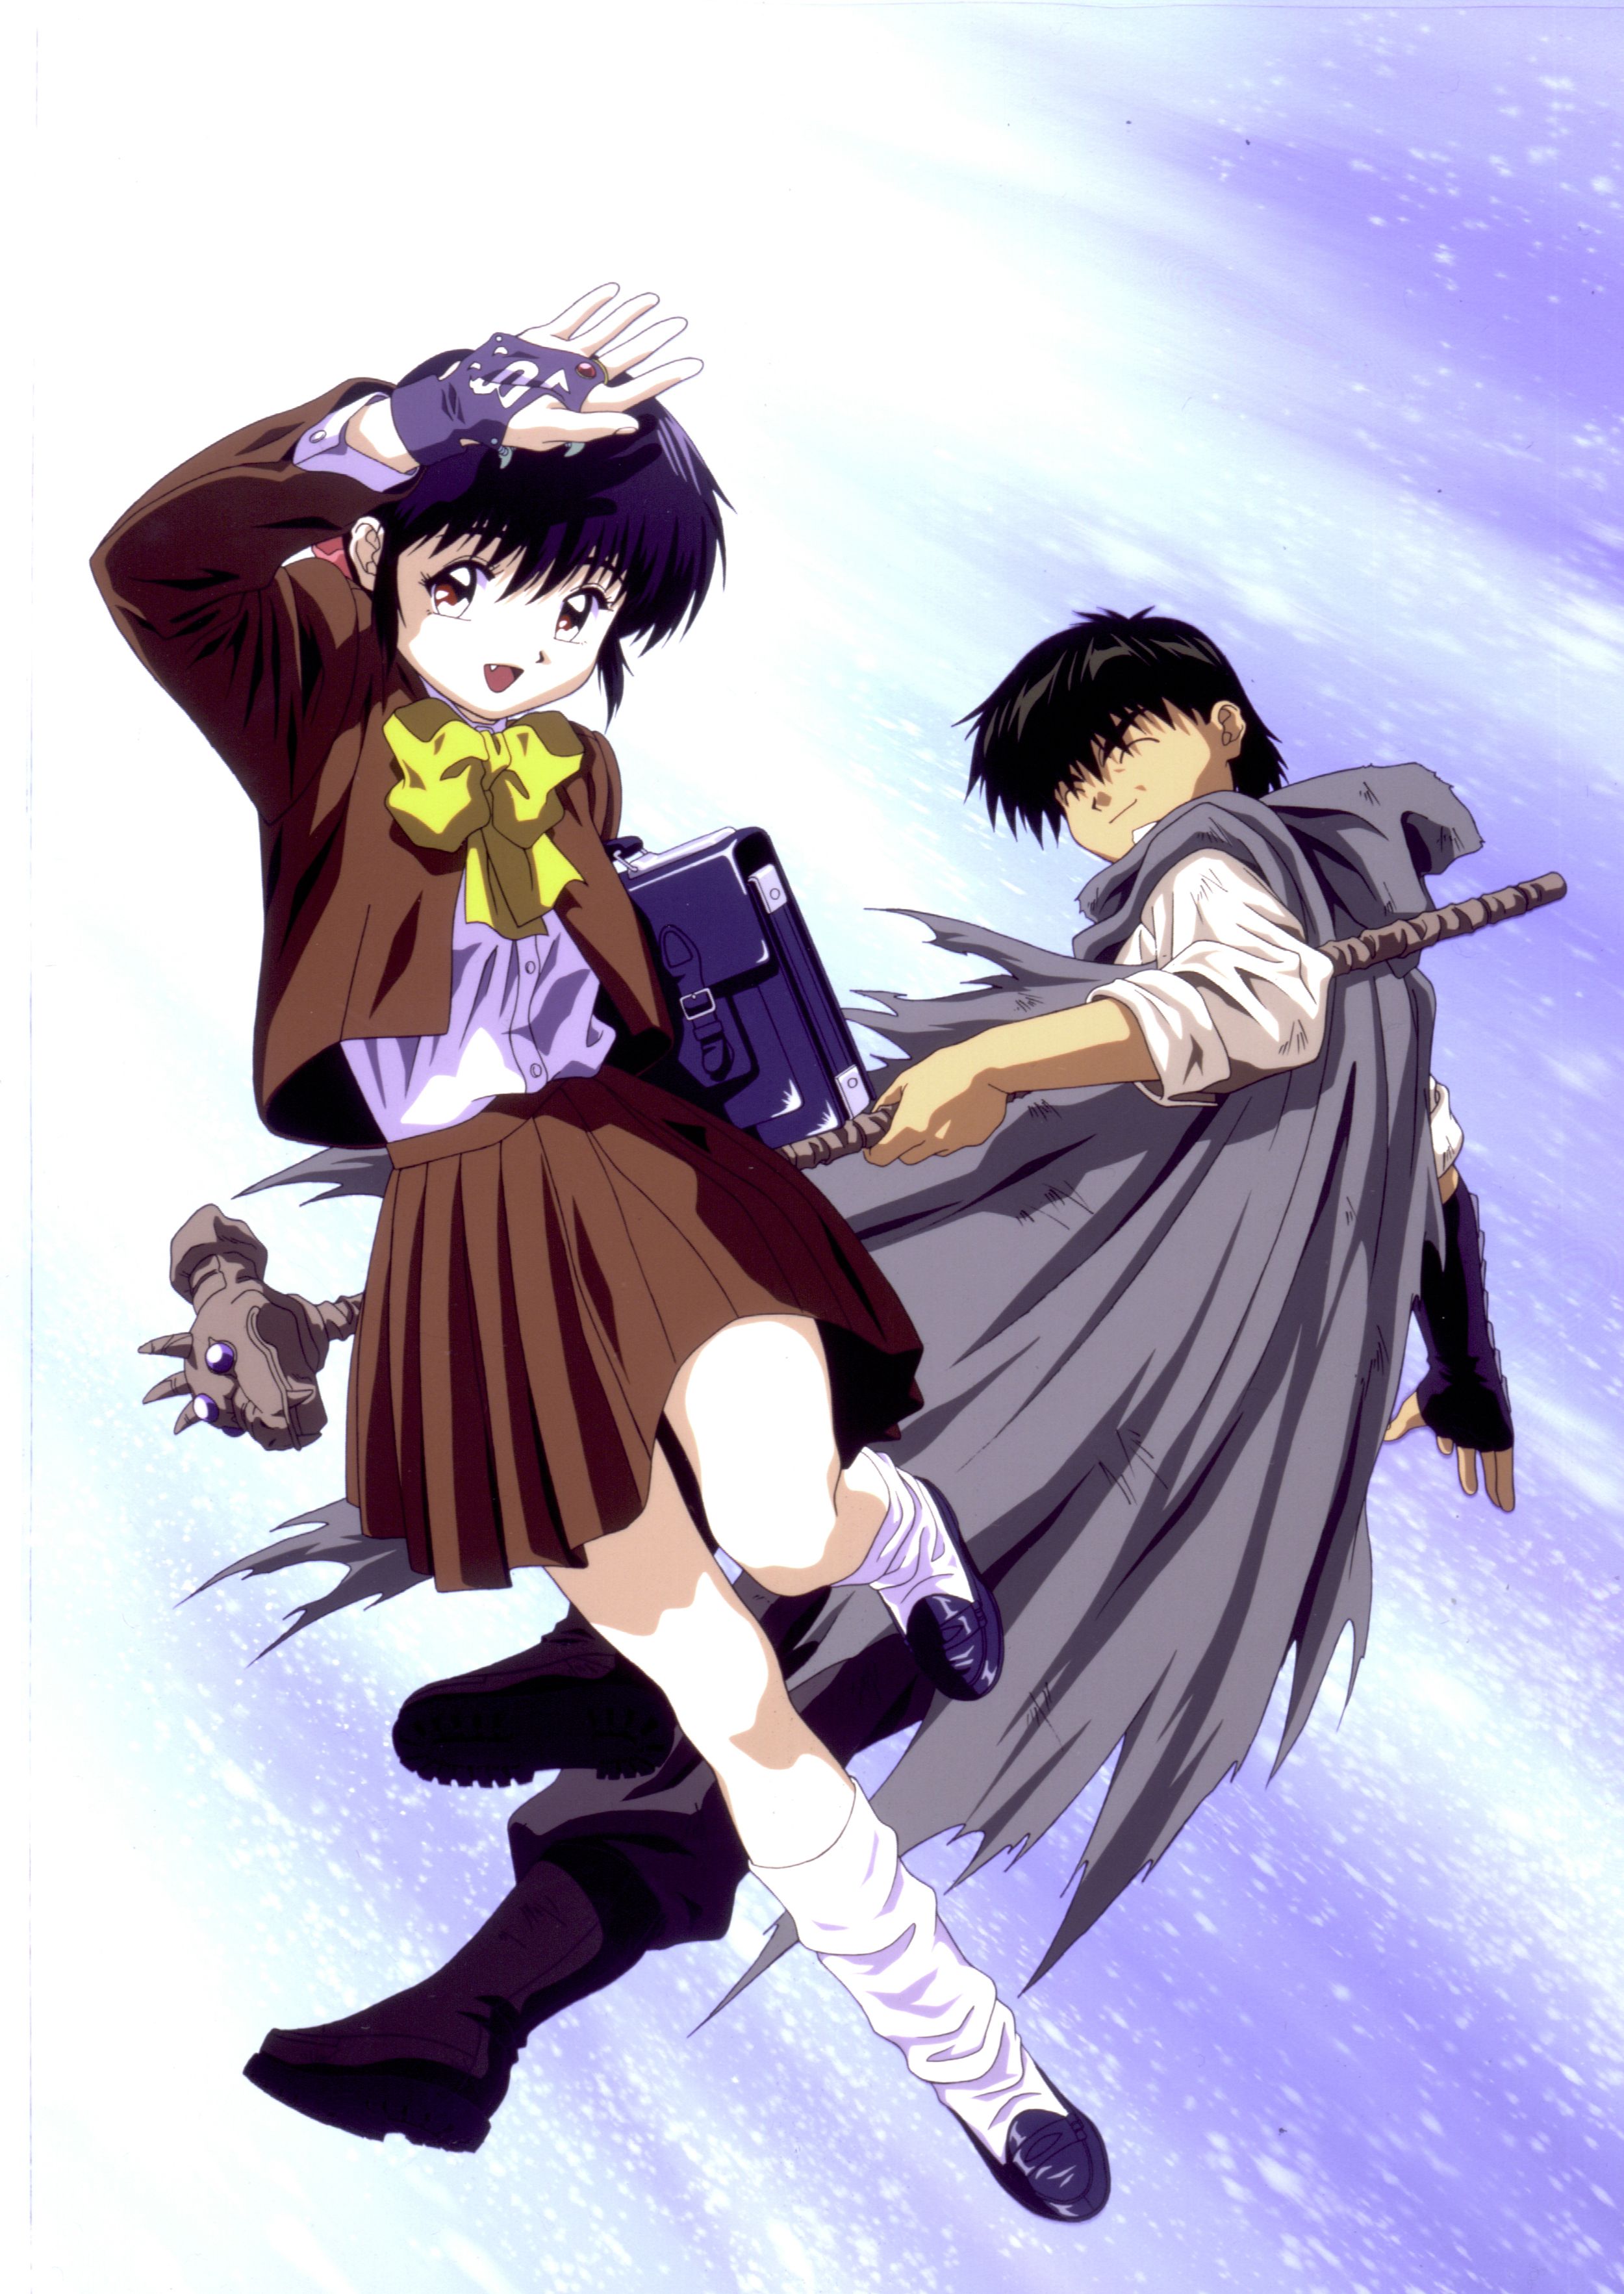 Momo Kyun Sword: Episode List, Magical Girl (Mahou Shoujo - 魔法少女) Wiki